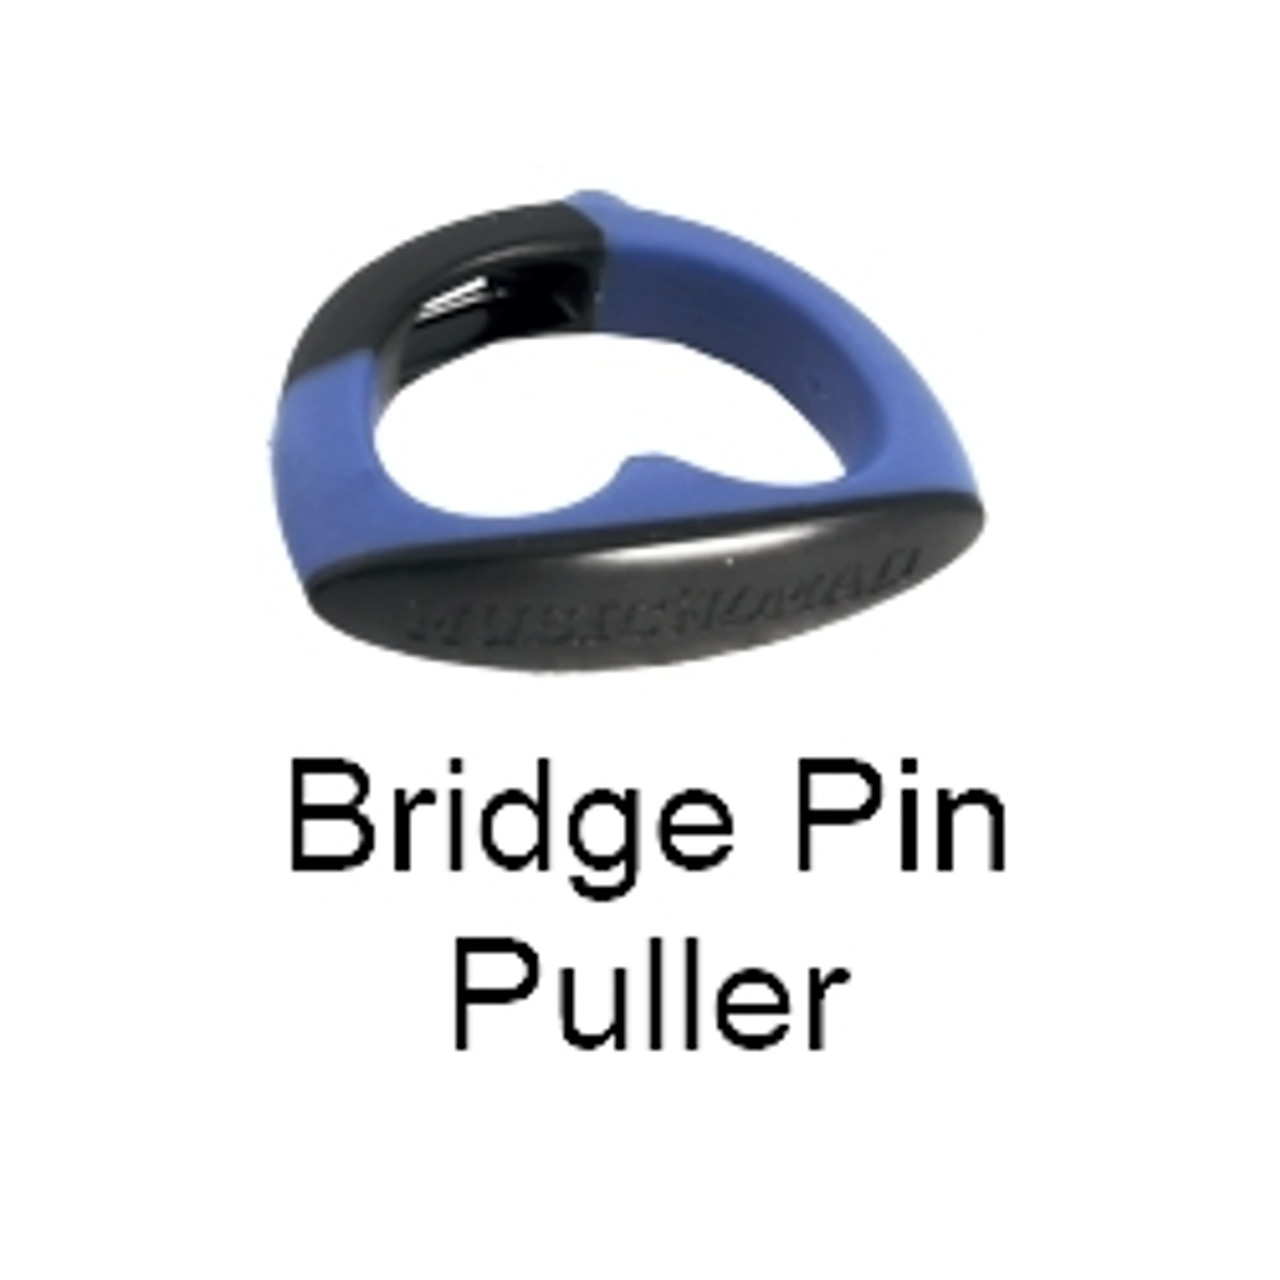 Bridge Pin Puller